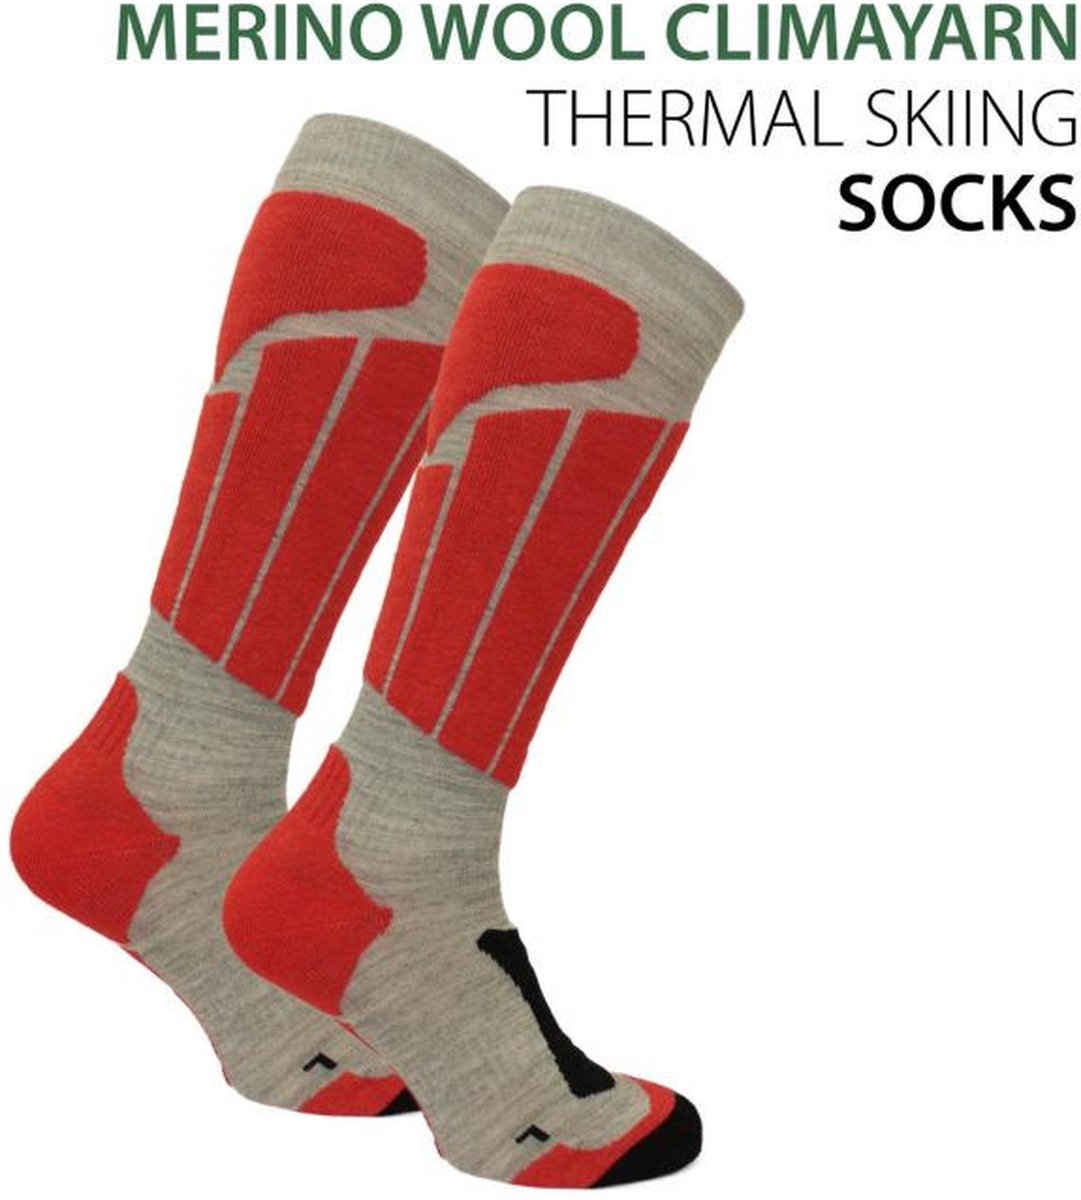 Norfolk Skisokken - 1 paar - Merino wol Climayarn - Warm en Droog Thermo Skisokken met Zonedemping - Maat 43-46 - Rood - Aspen